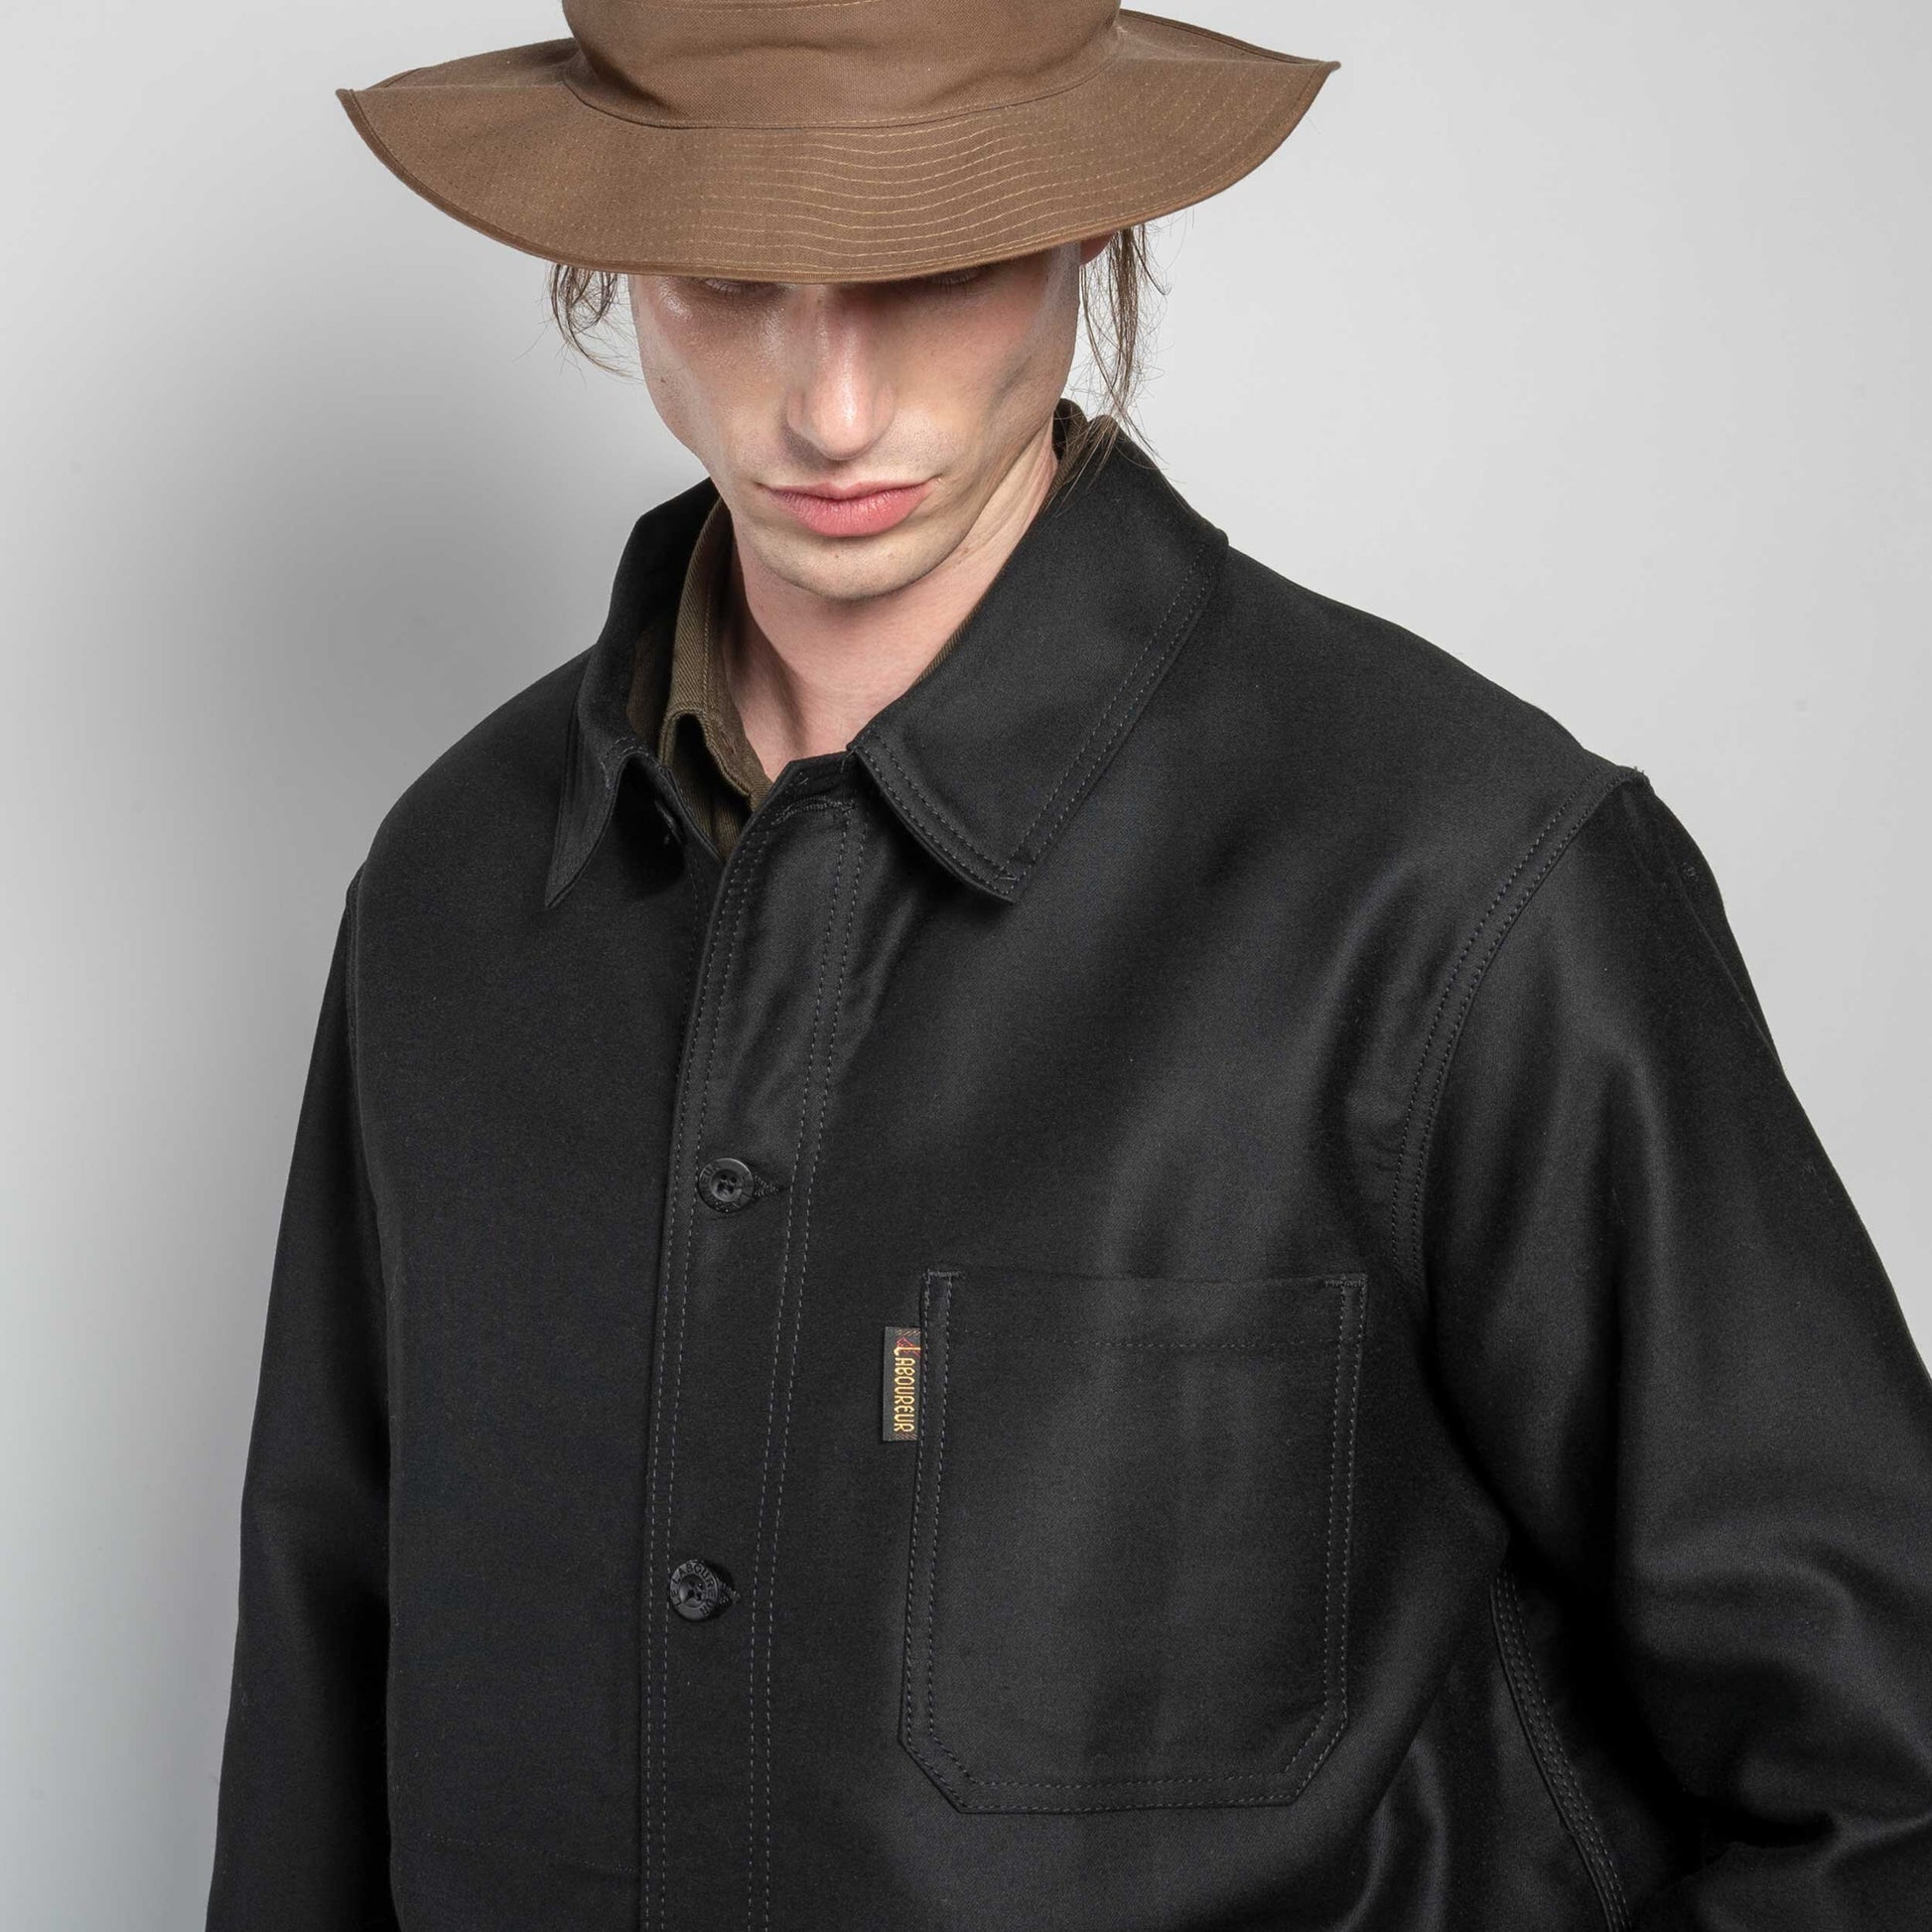 Le Laboureur French Cotton Moleskin Work Jacket in Black